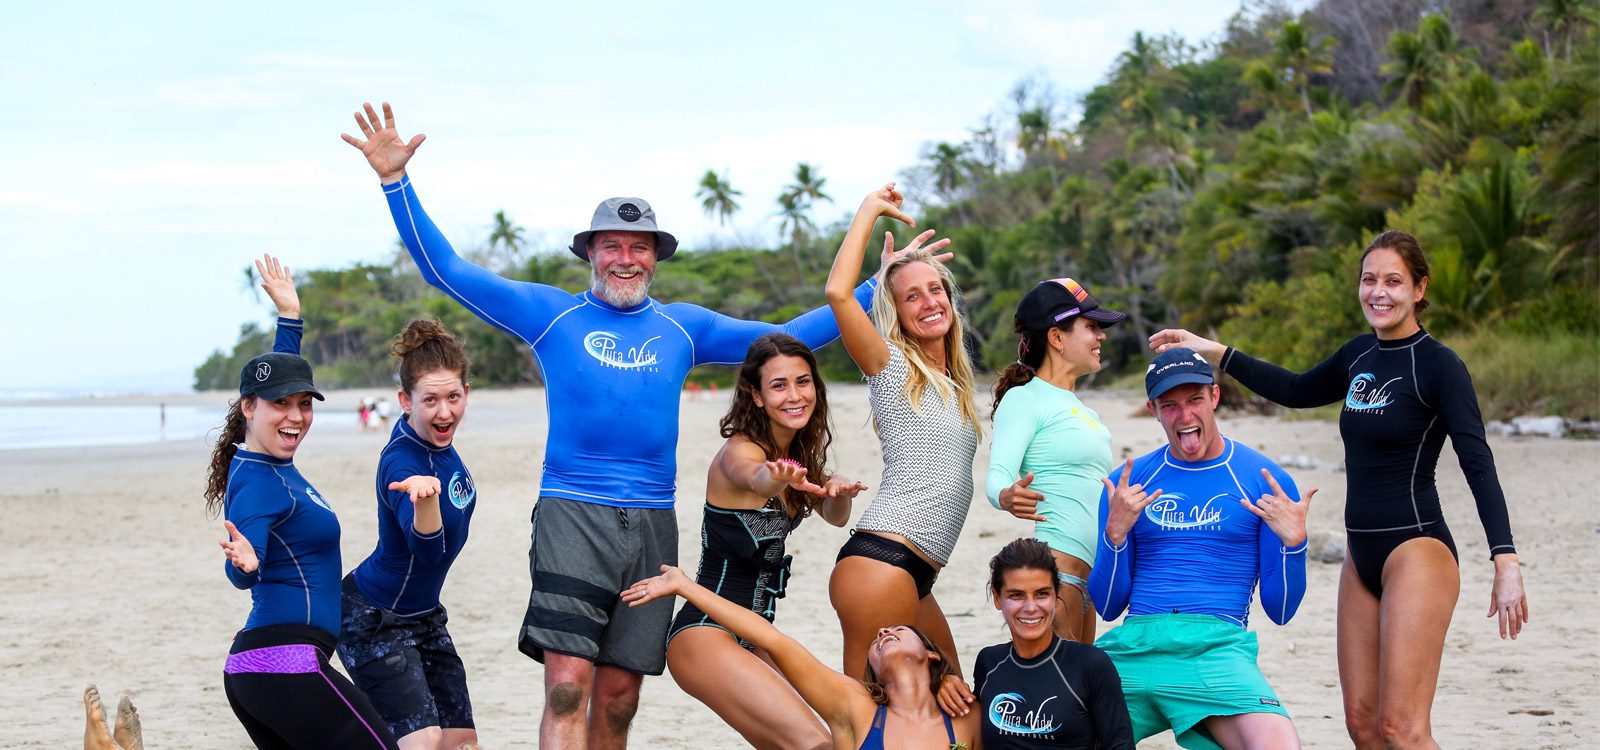 Costa Rica Surf Camp Participants having fun